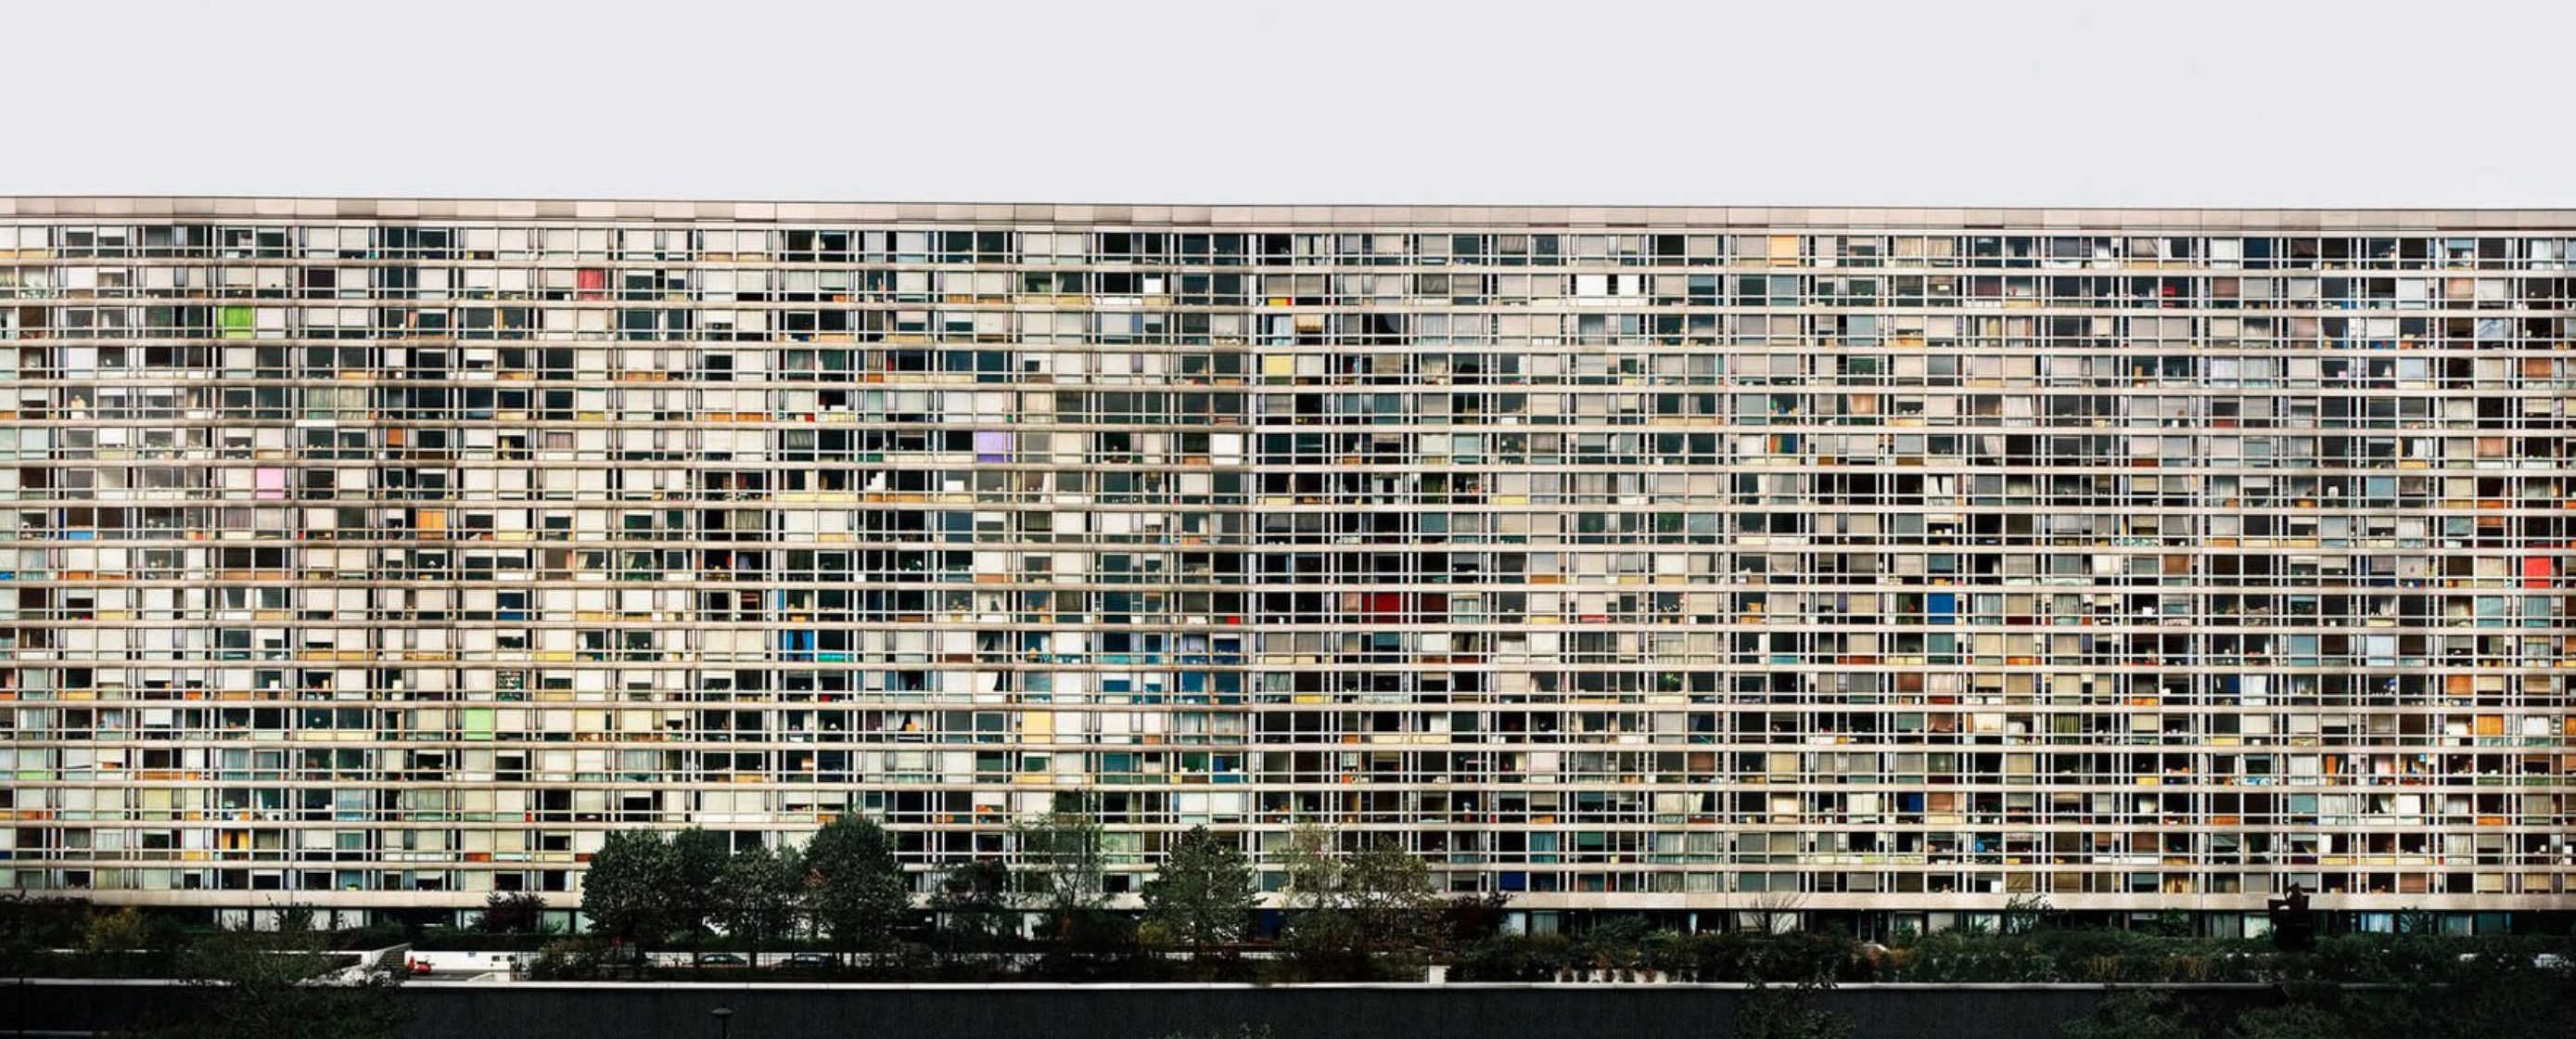 Andreas Gursky - Paris, Montparnasse, 1993